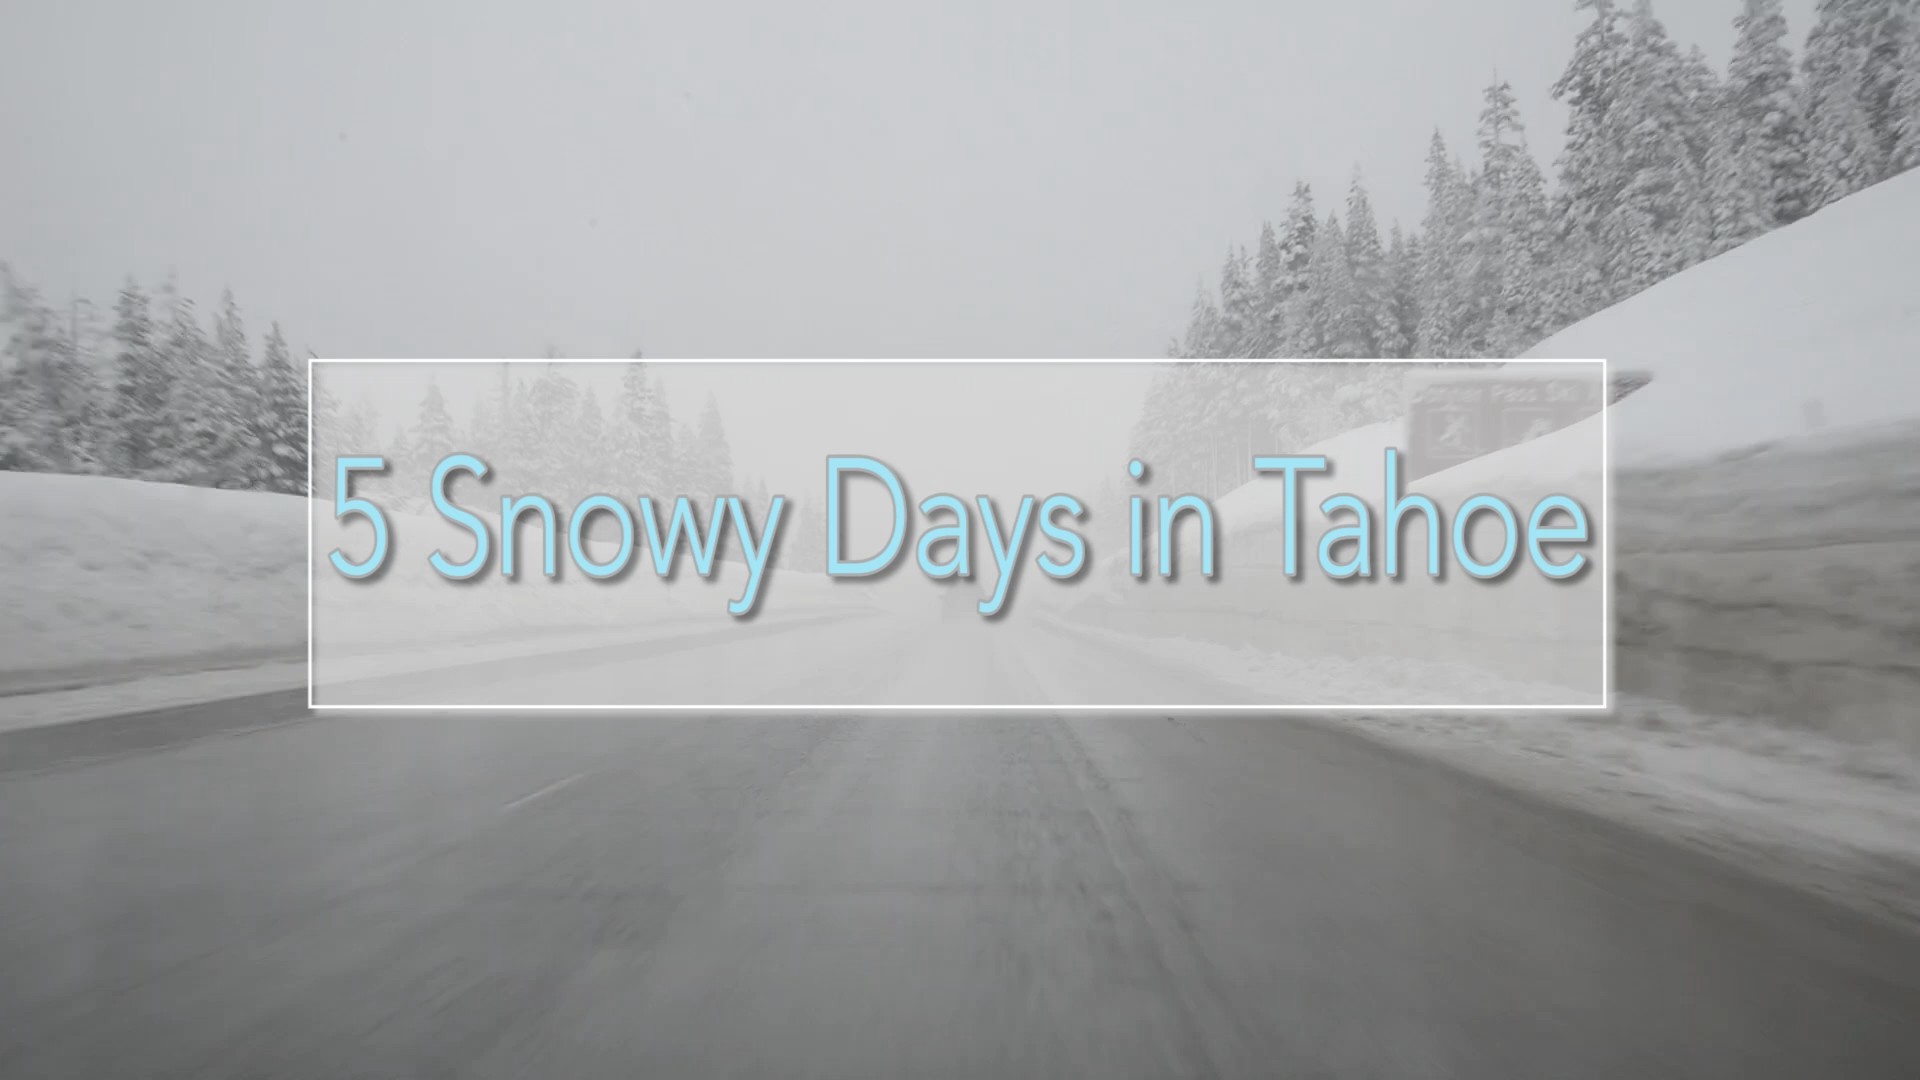 Snowy days in Tahoe